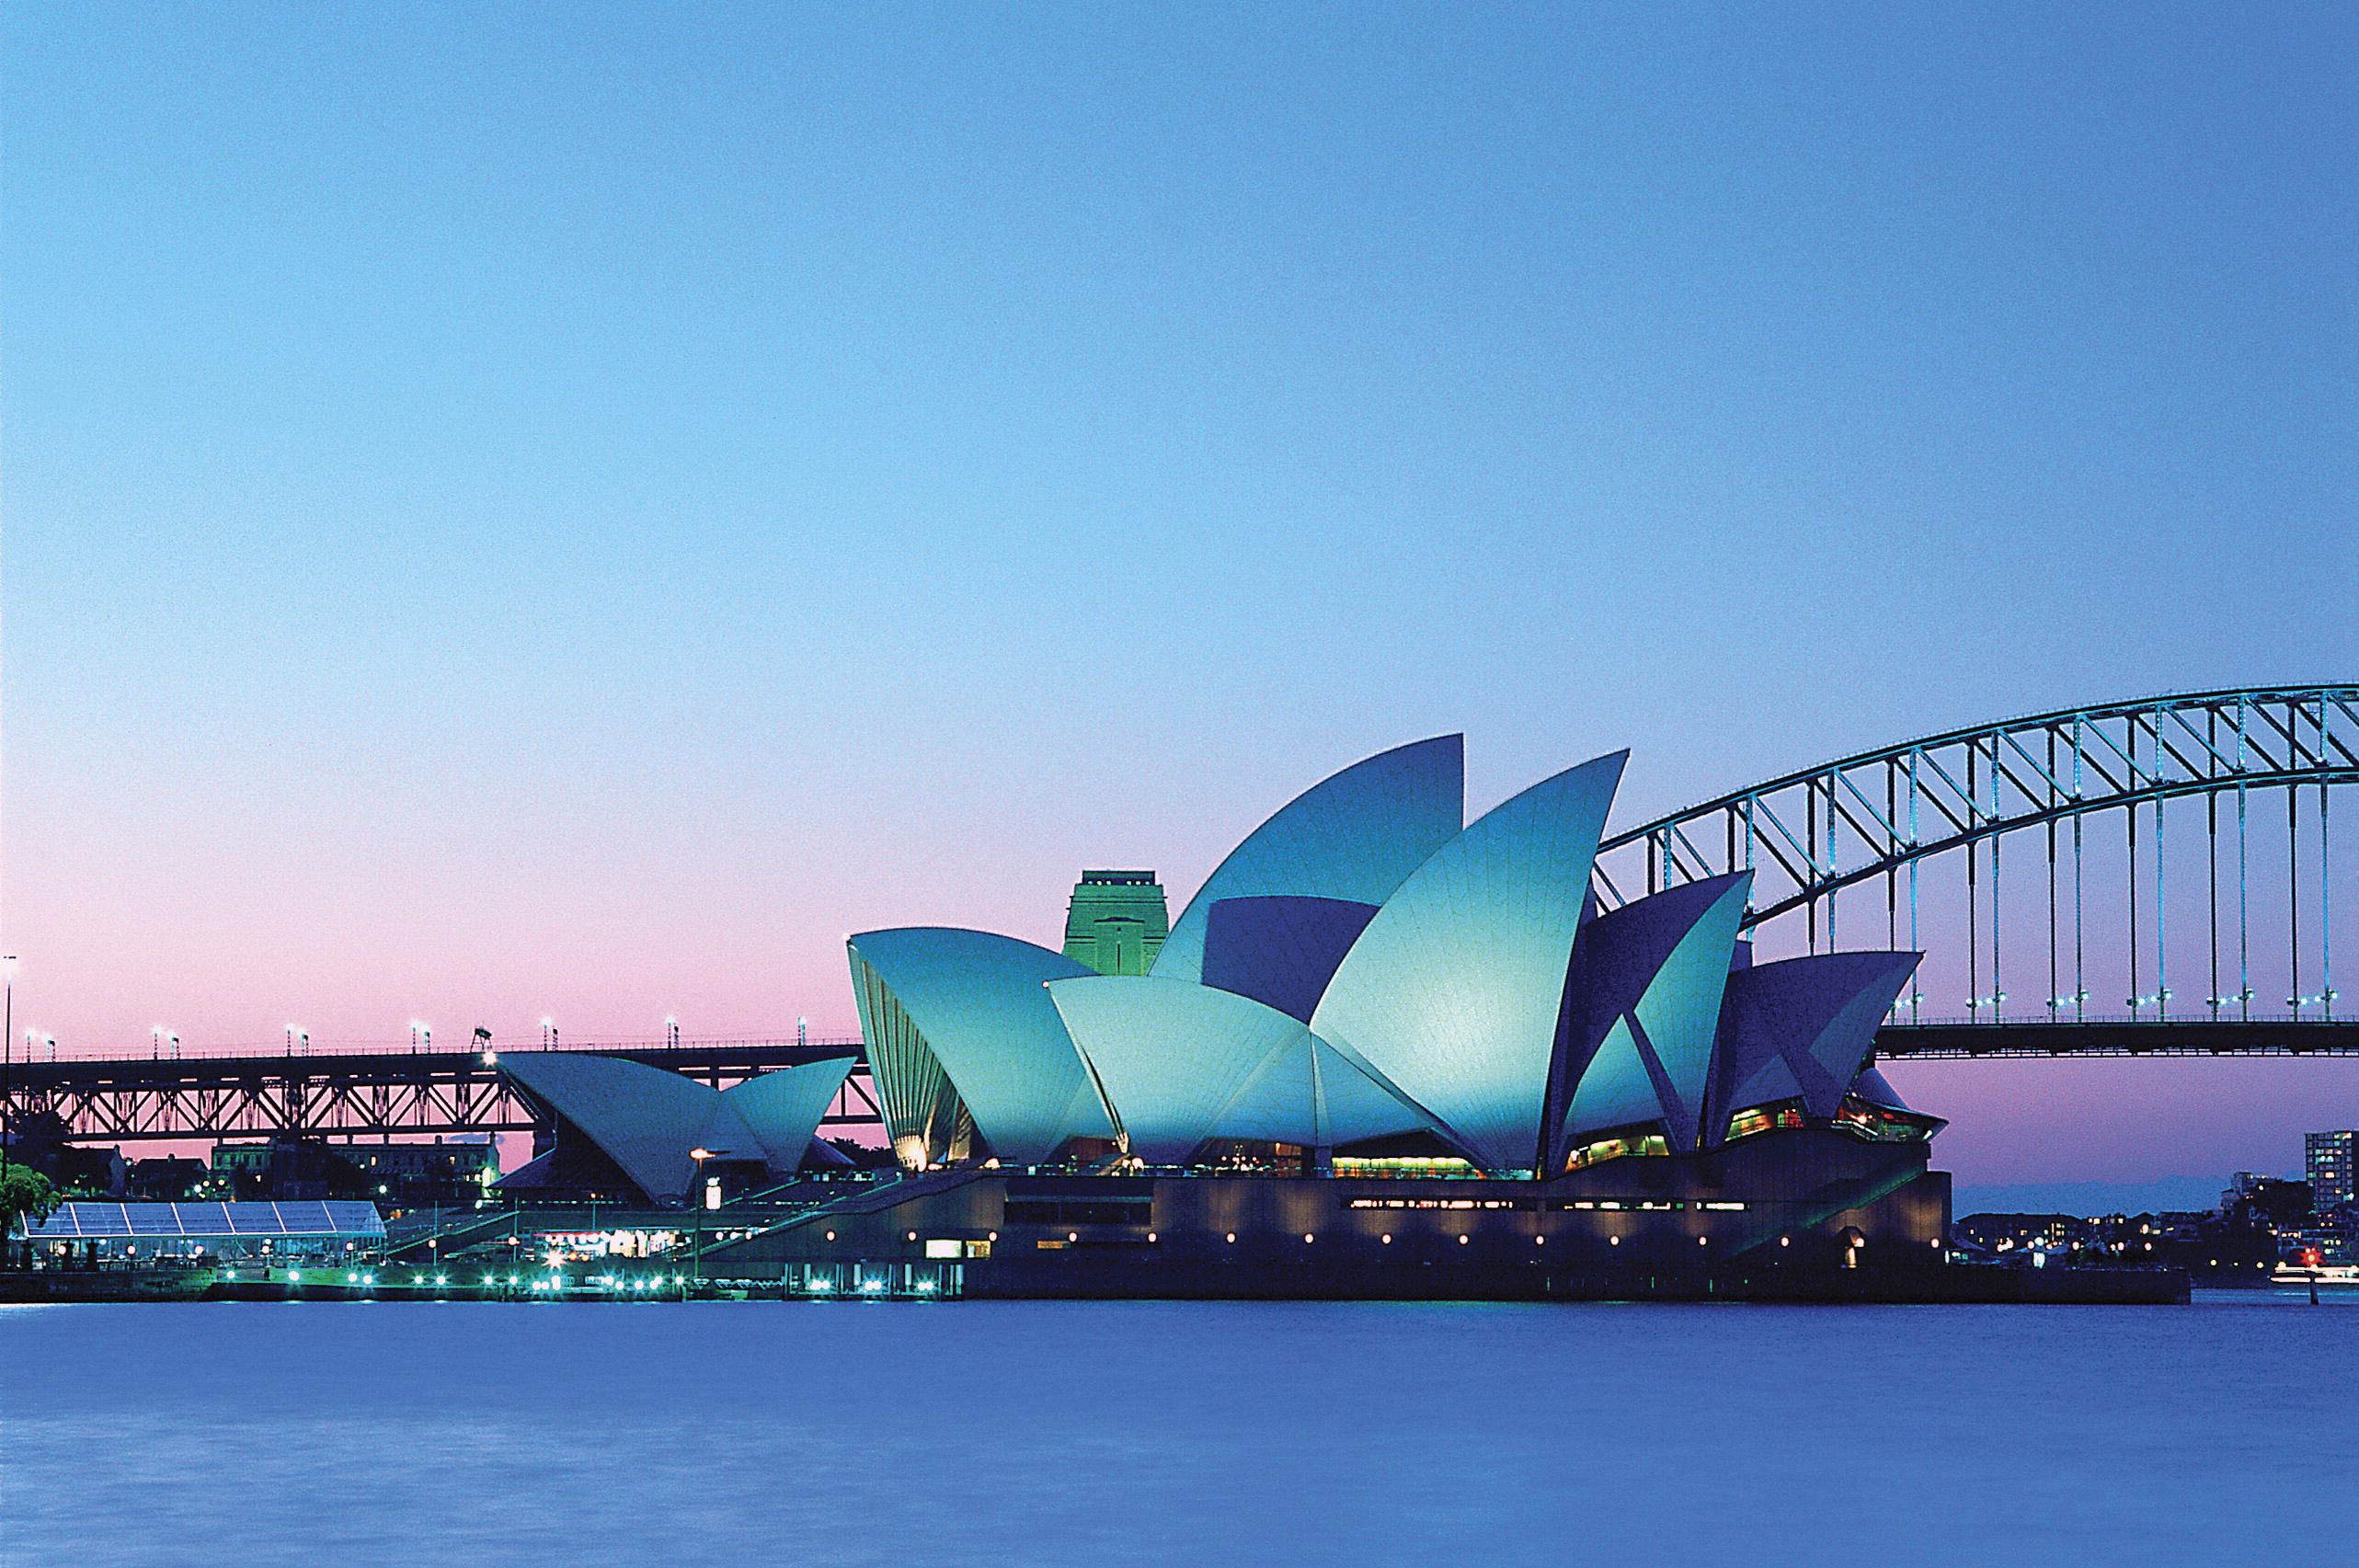 2565x1705 Australia Sydney Opera House Sunset Wallpaper 2565x1705 87911 Wallpaperup